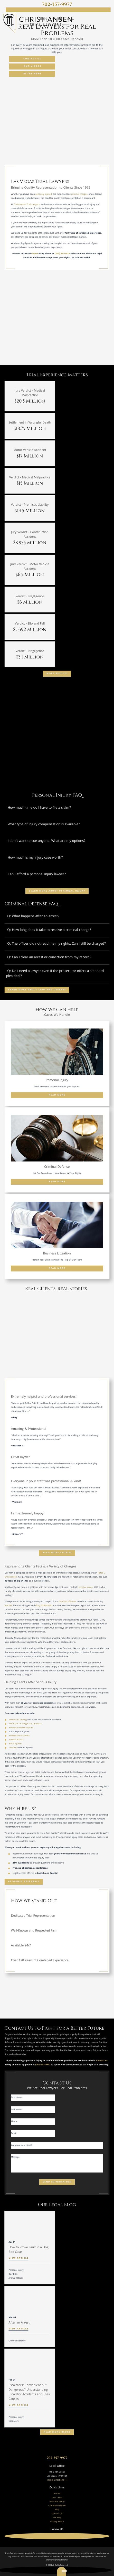 Christiansen Law Offices - Las Vegas NV Lawyers